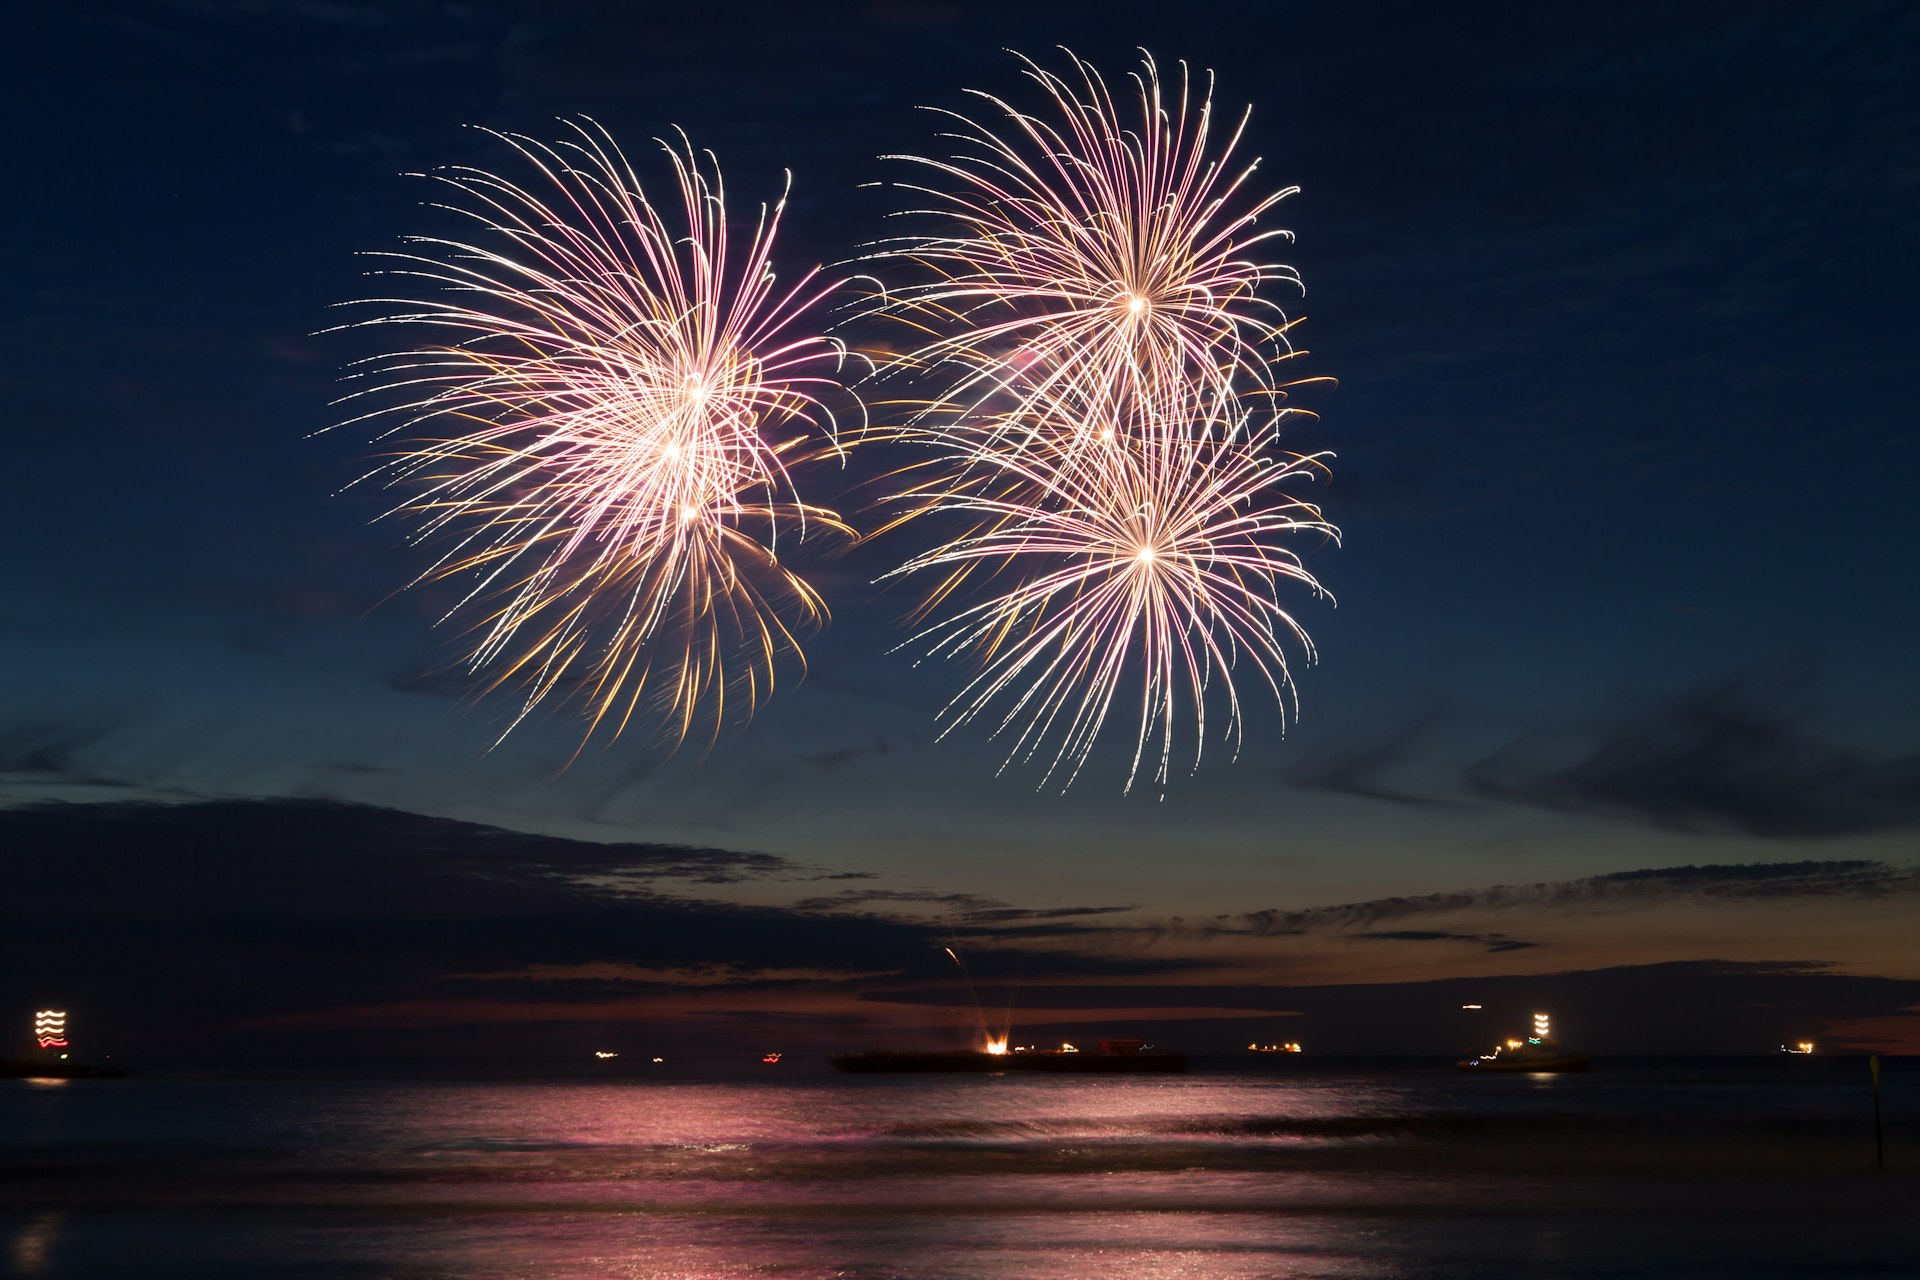 Fireworks are an inspiring end to a summer's day in Scheveningen